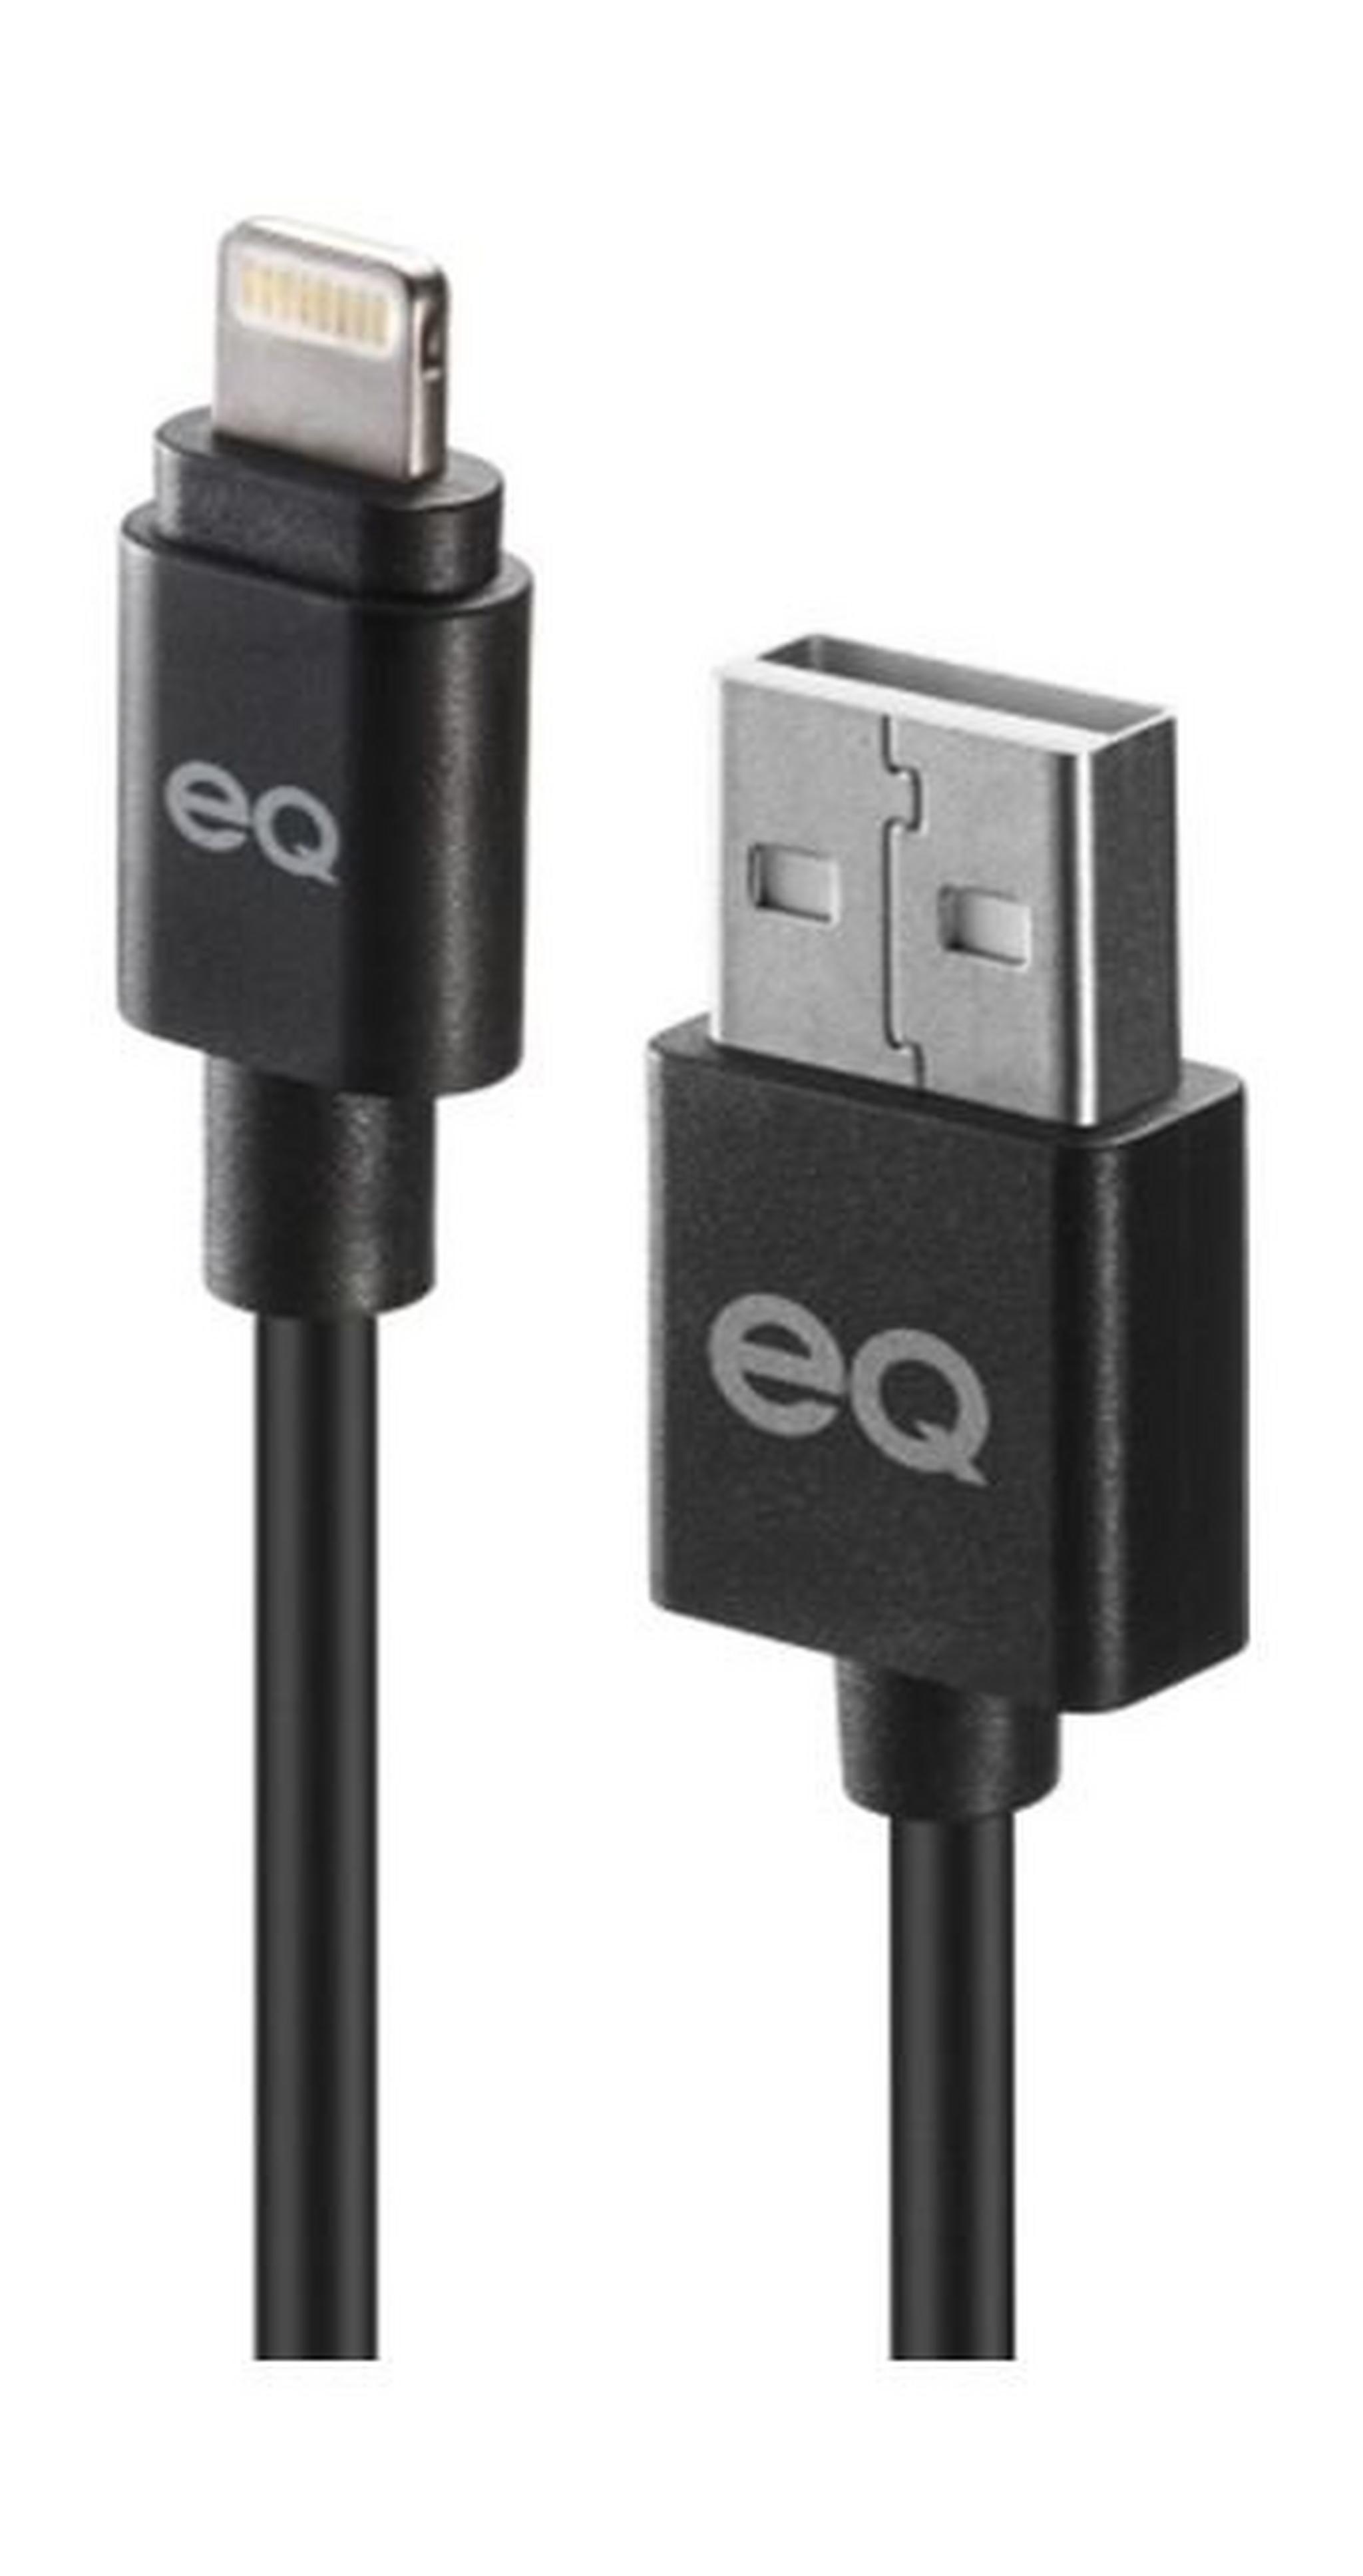 EQ Lightning Cable 1m - Black